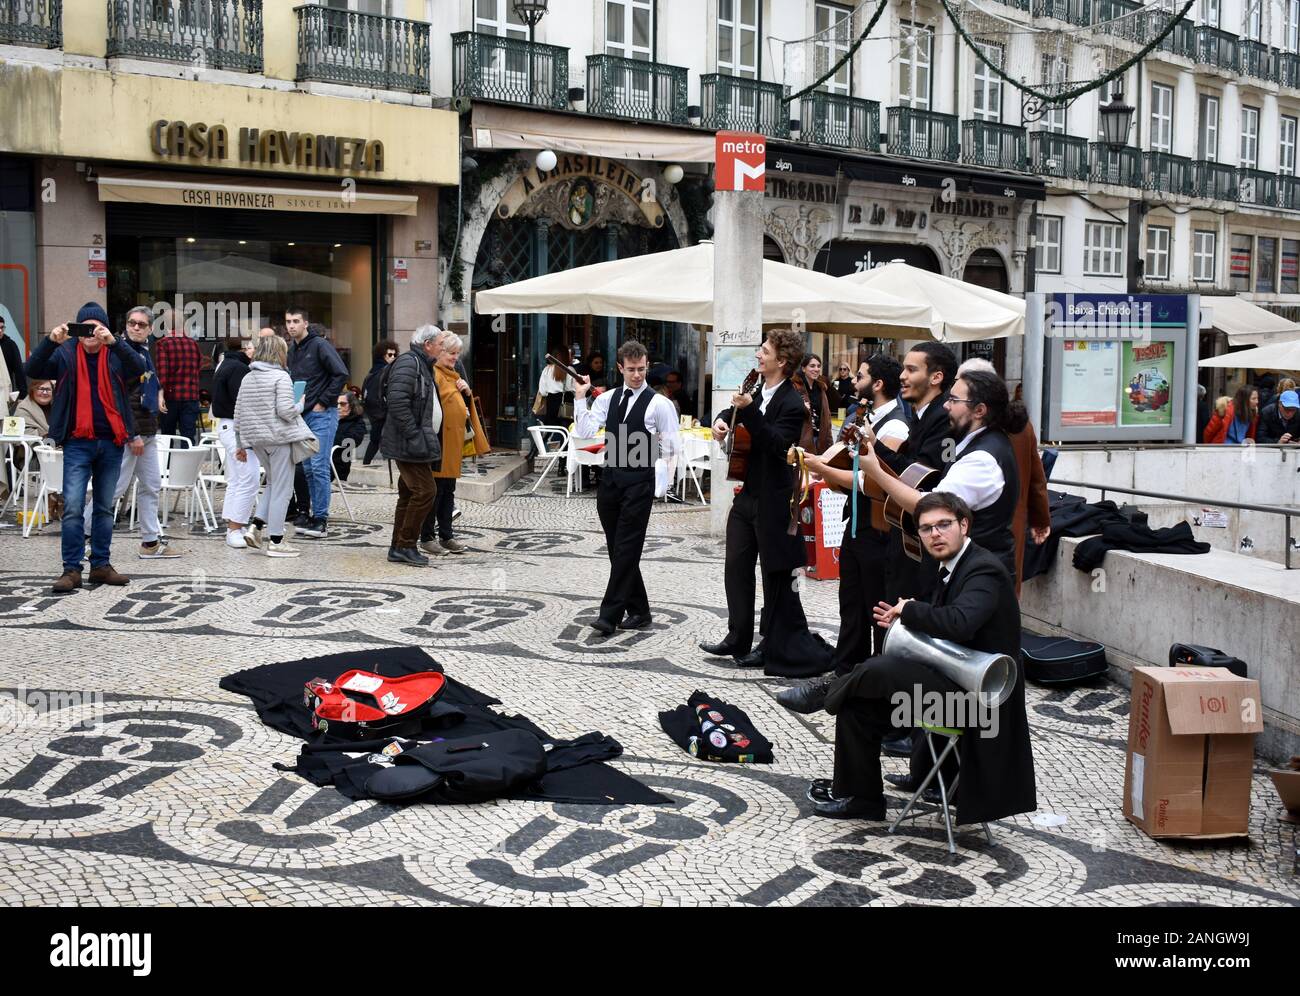 Street entertainers perform outside A Brasileira cafe, Baixa Chiado, Lisbon, Portugal Stock Photo